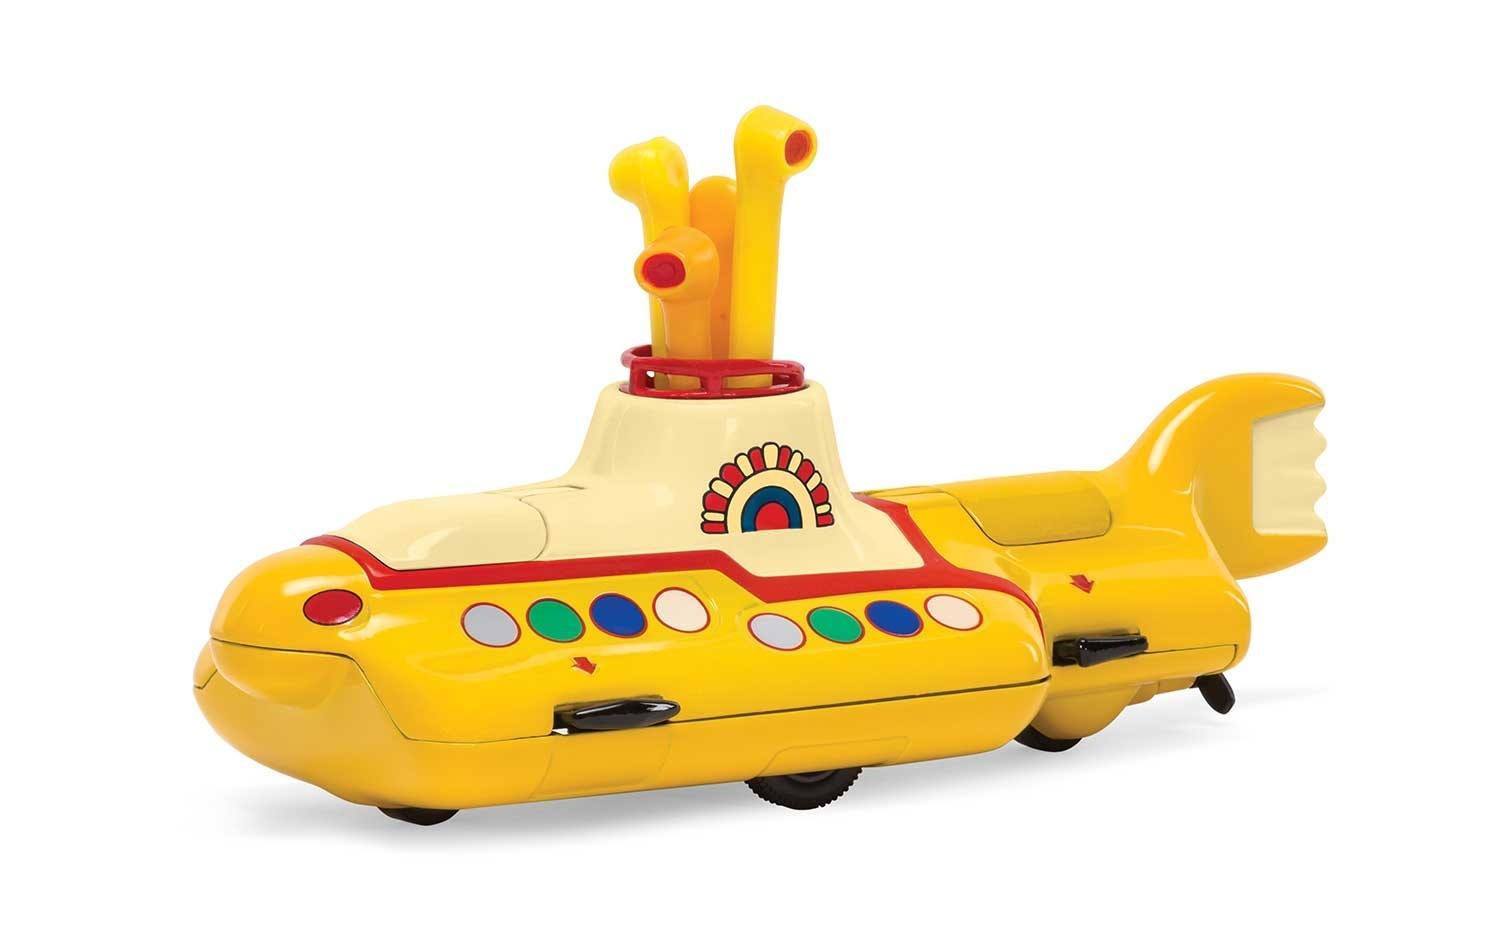 The Beatles Diecast Modell Yellow Submarine